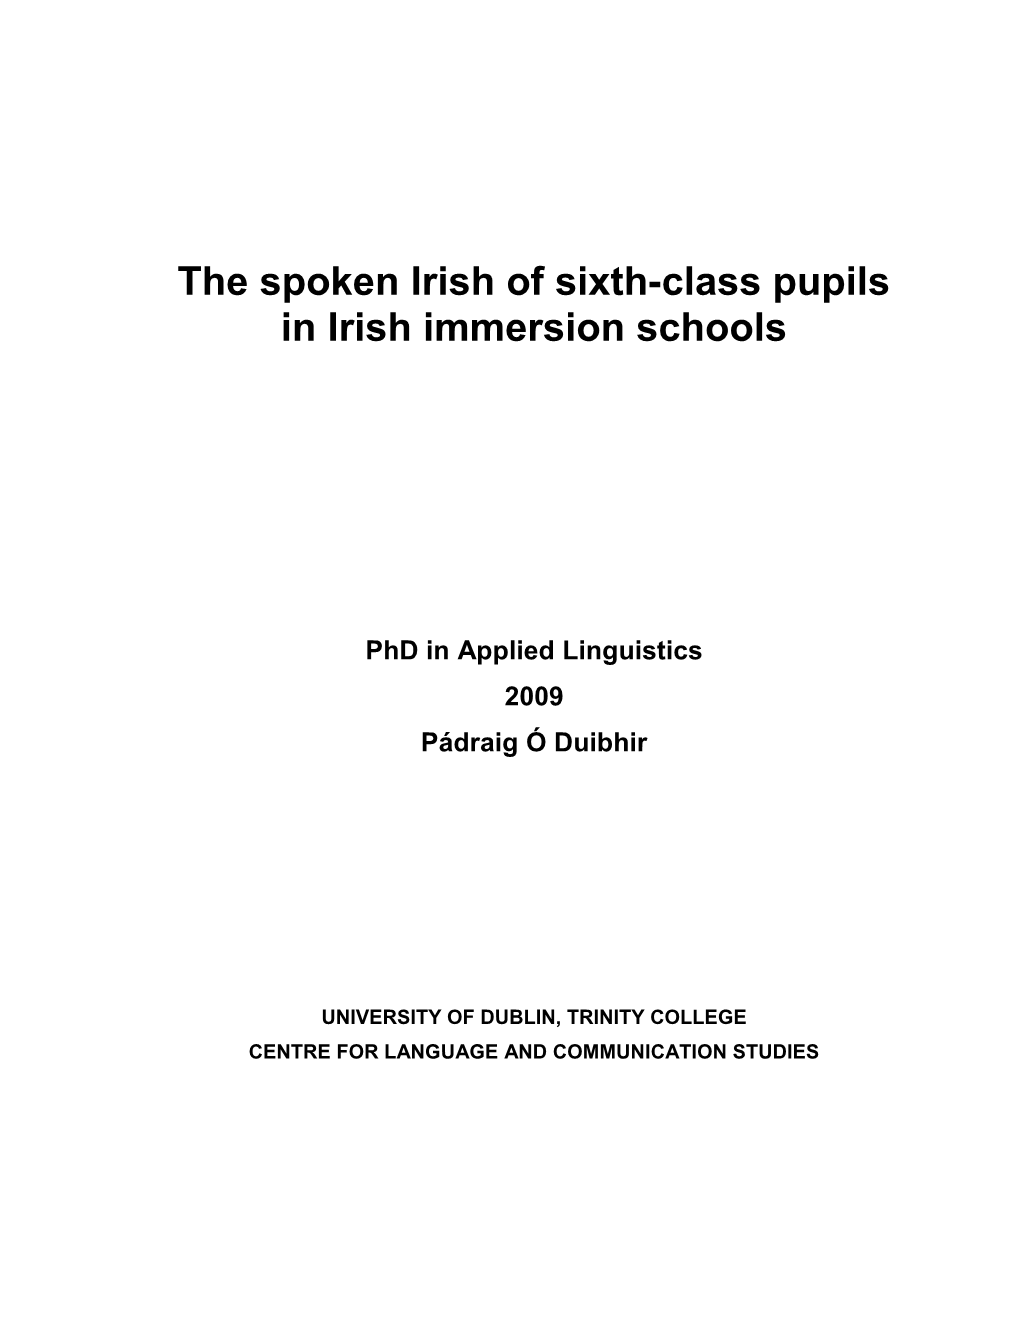 The Spoken Irish of Sixth-Class Pupils in Irish Immersion Schools